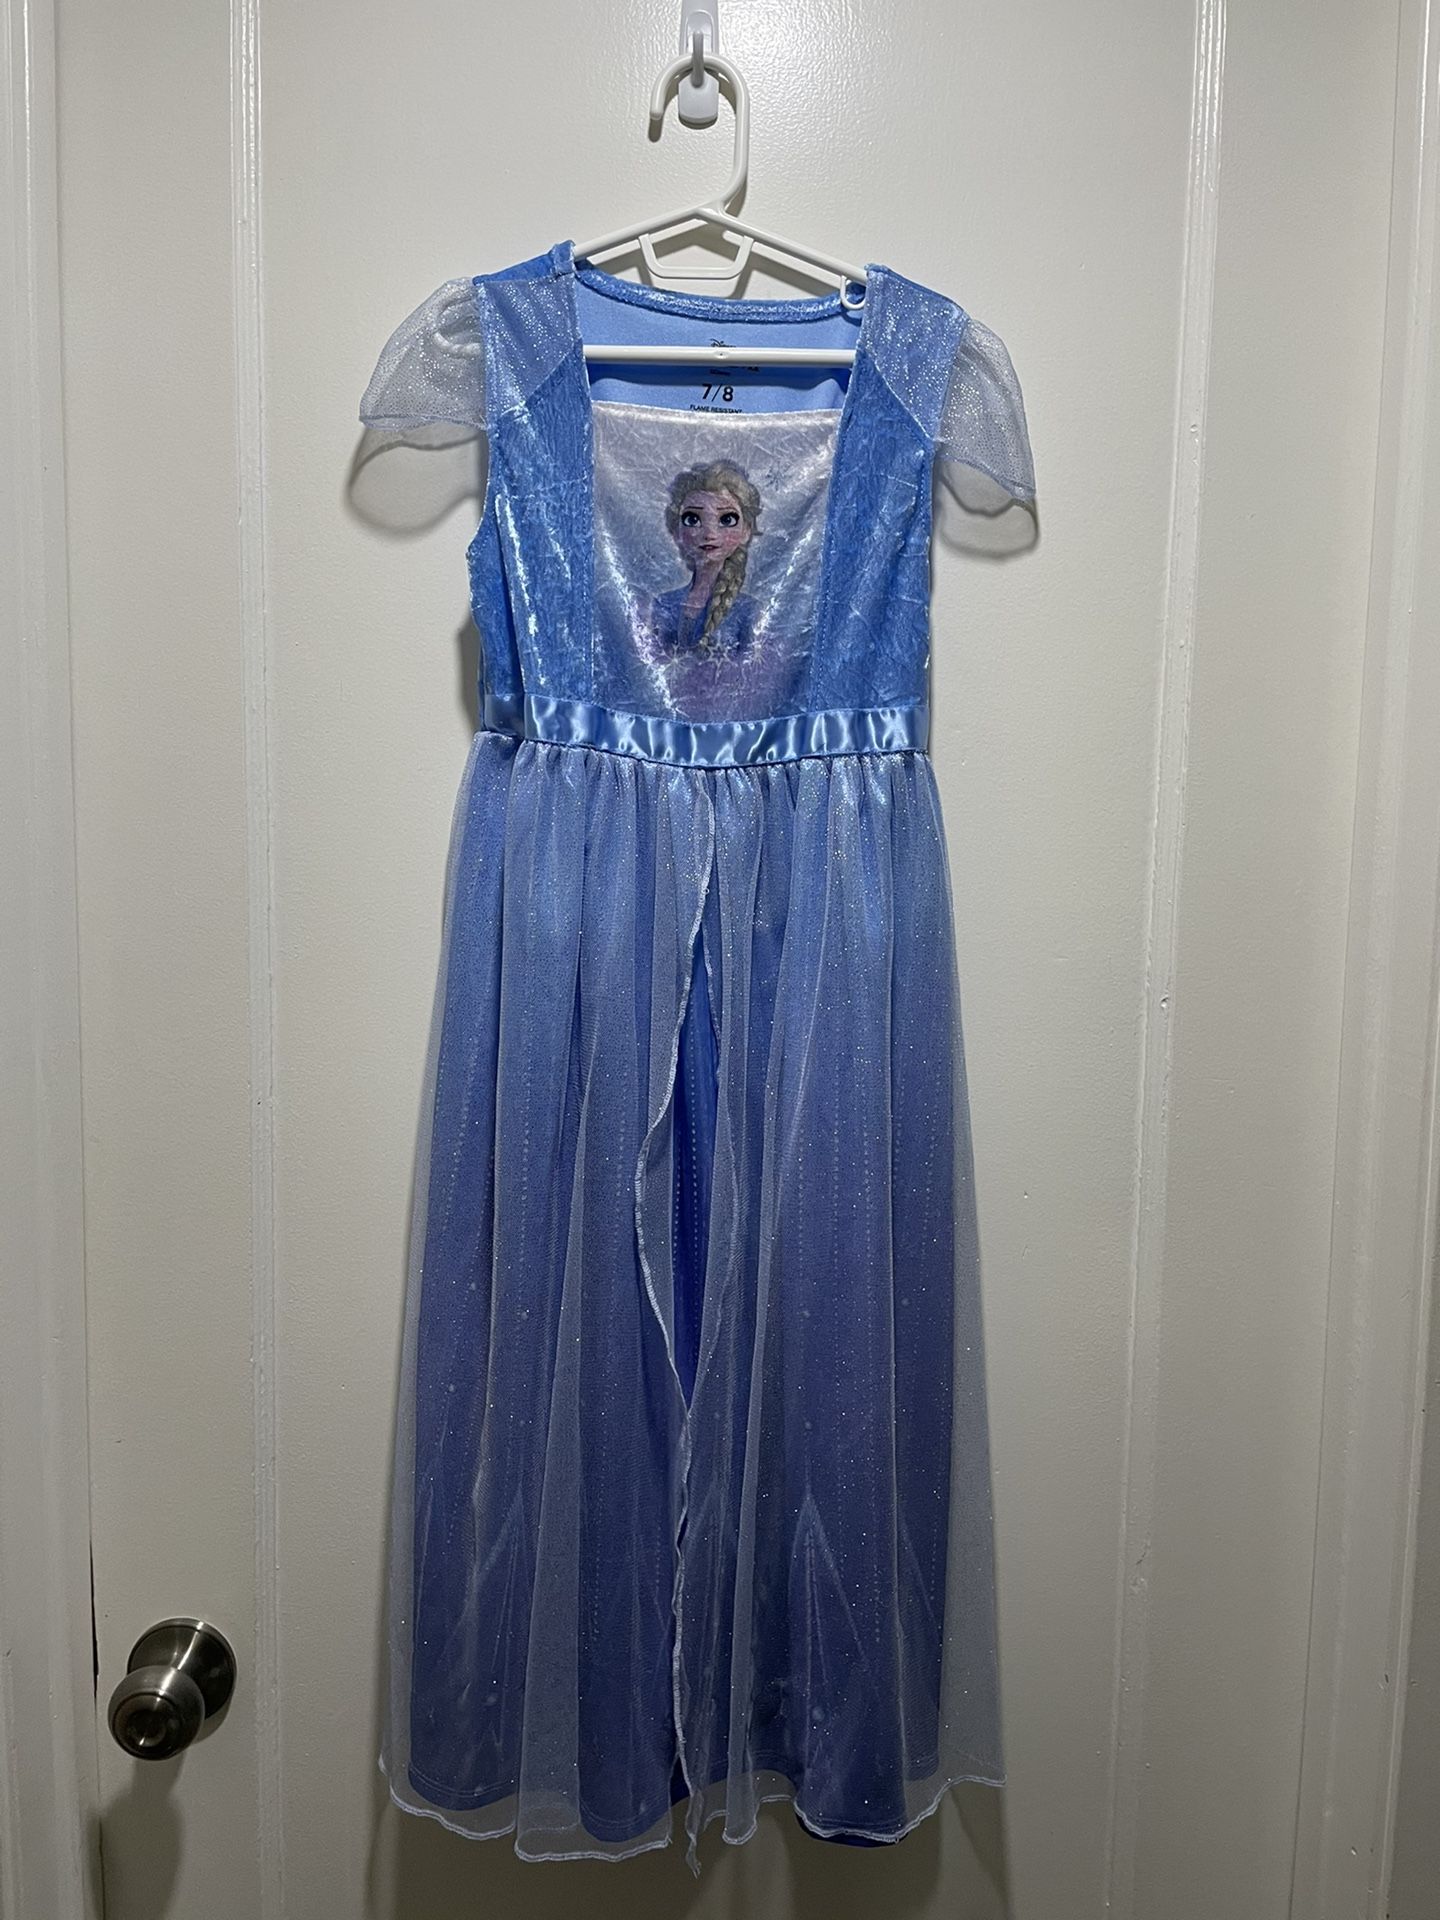 Elsa Frozen Costume Dress PJ